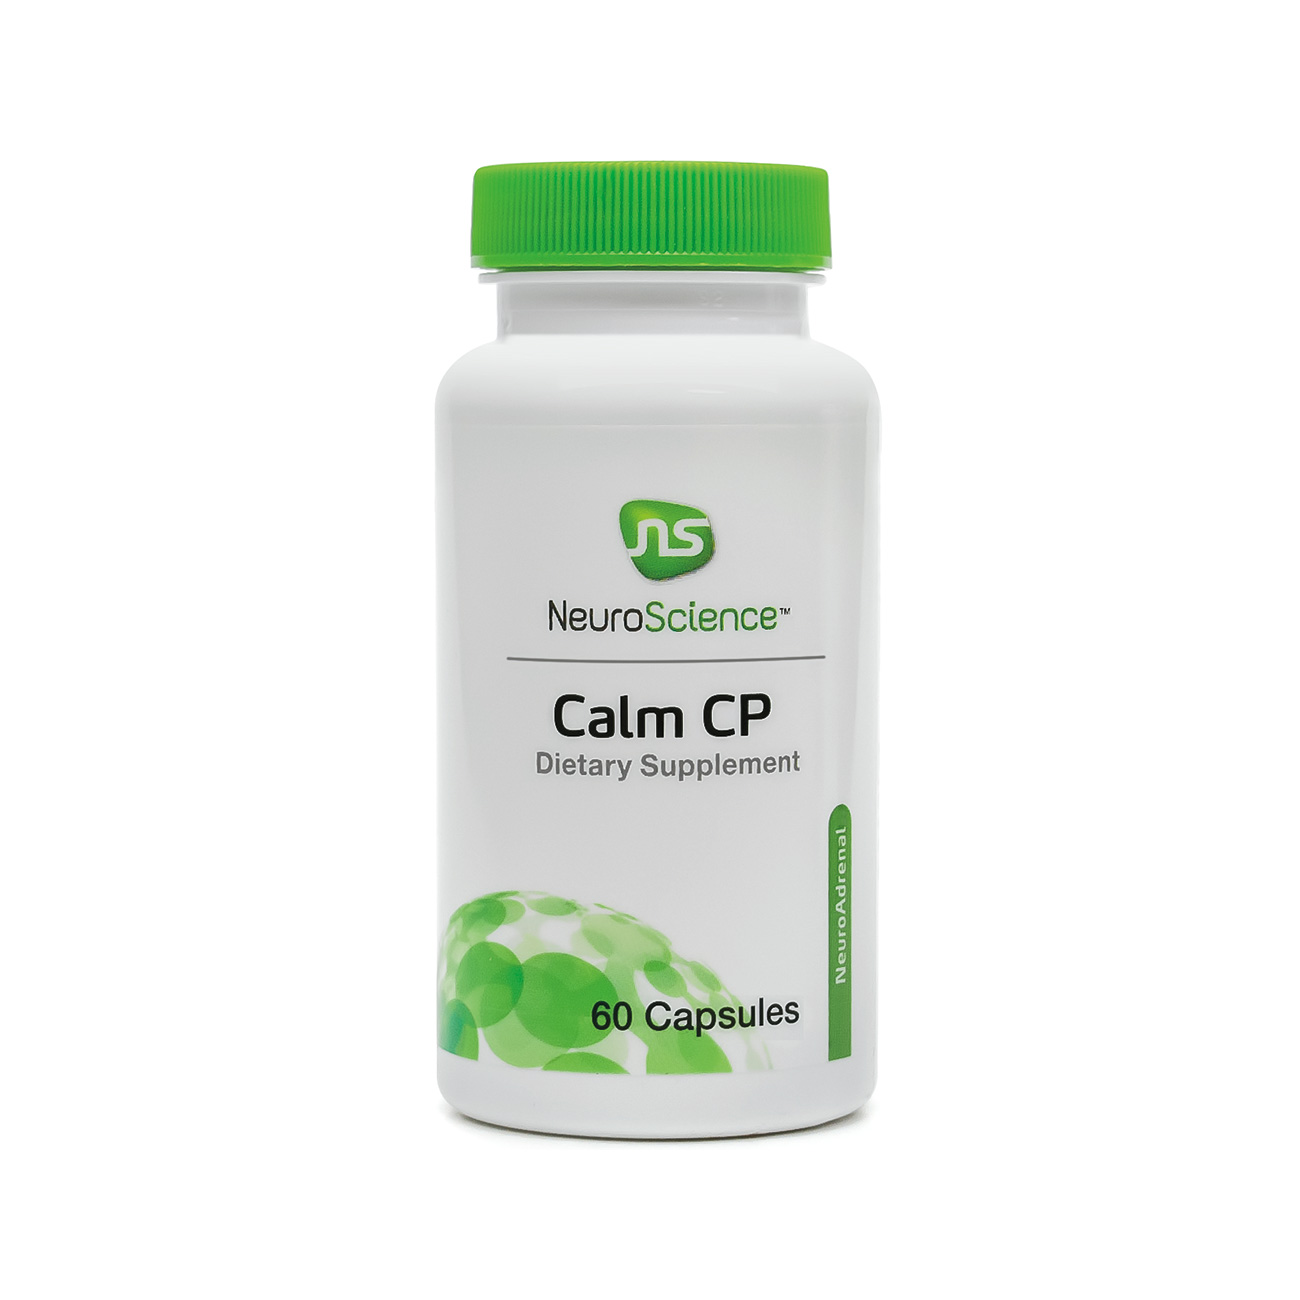 NeuroScience Calm CP Dietary Supplement